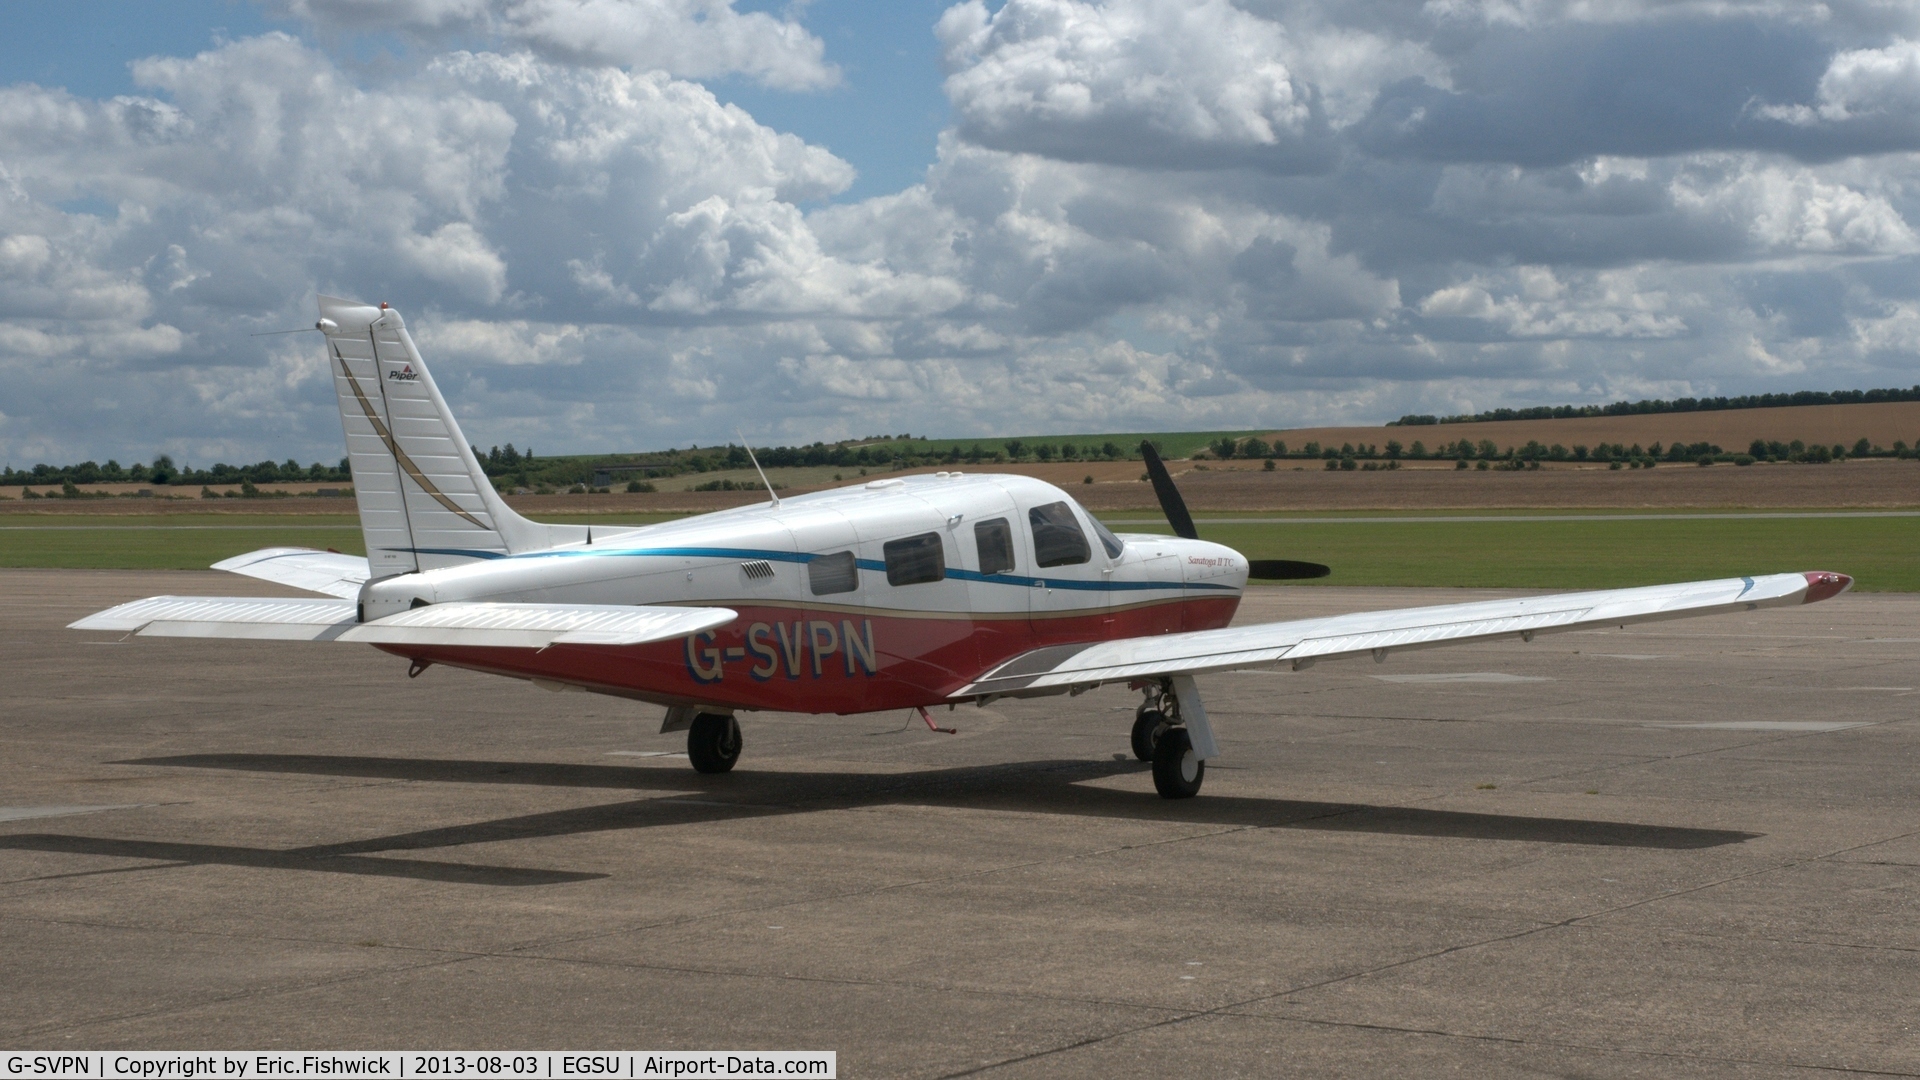 G-SVPN, 2003 Piper PA-32R-301T Turbo Saratoga C/N 3257310, 2. G-SVPN visiting Duxford Airfield.